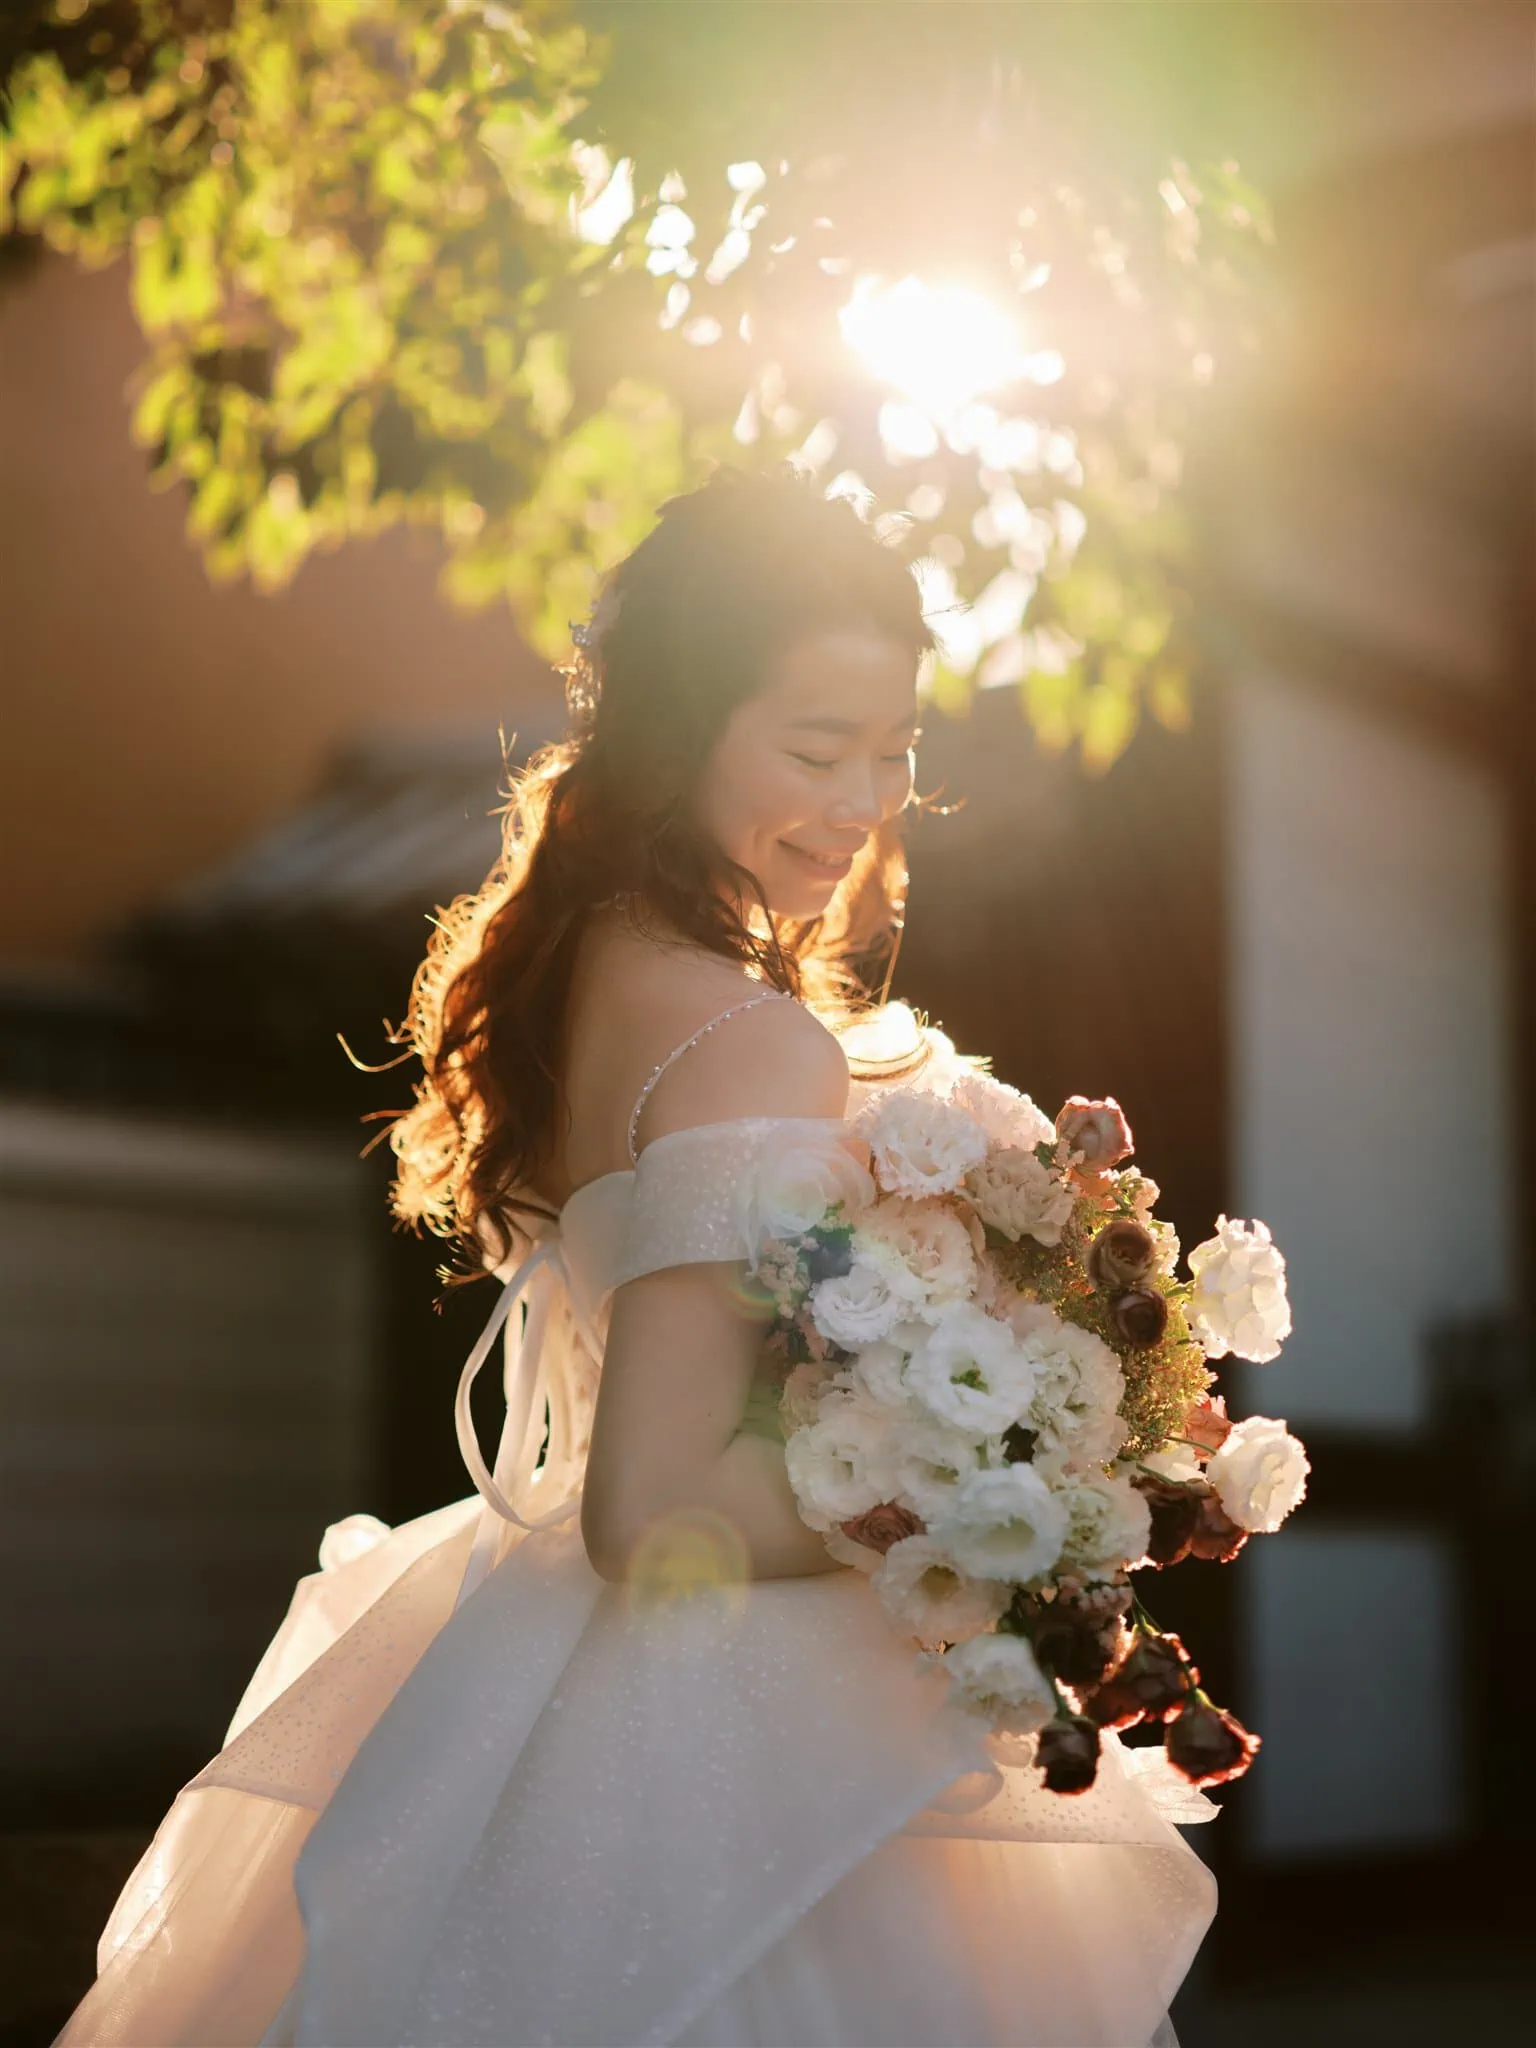 Kyoto Tokyo Japan Elopement Wedding Photographer, Planner & Videographer | A Japan elopement photographer captures a bride in a white wedding dress holding a bouquet.